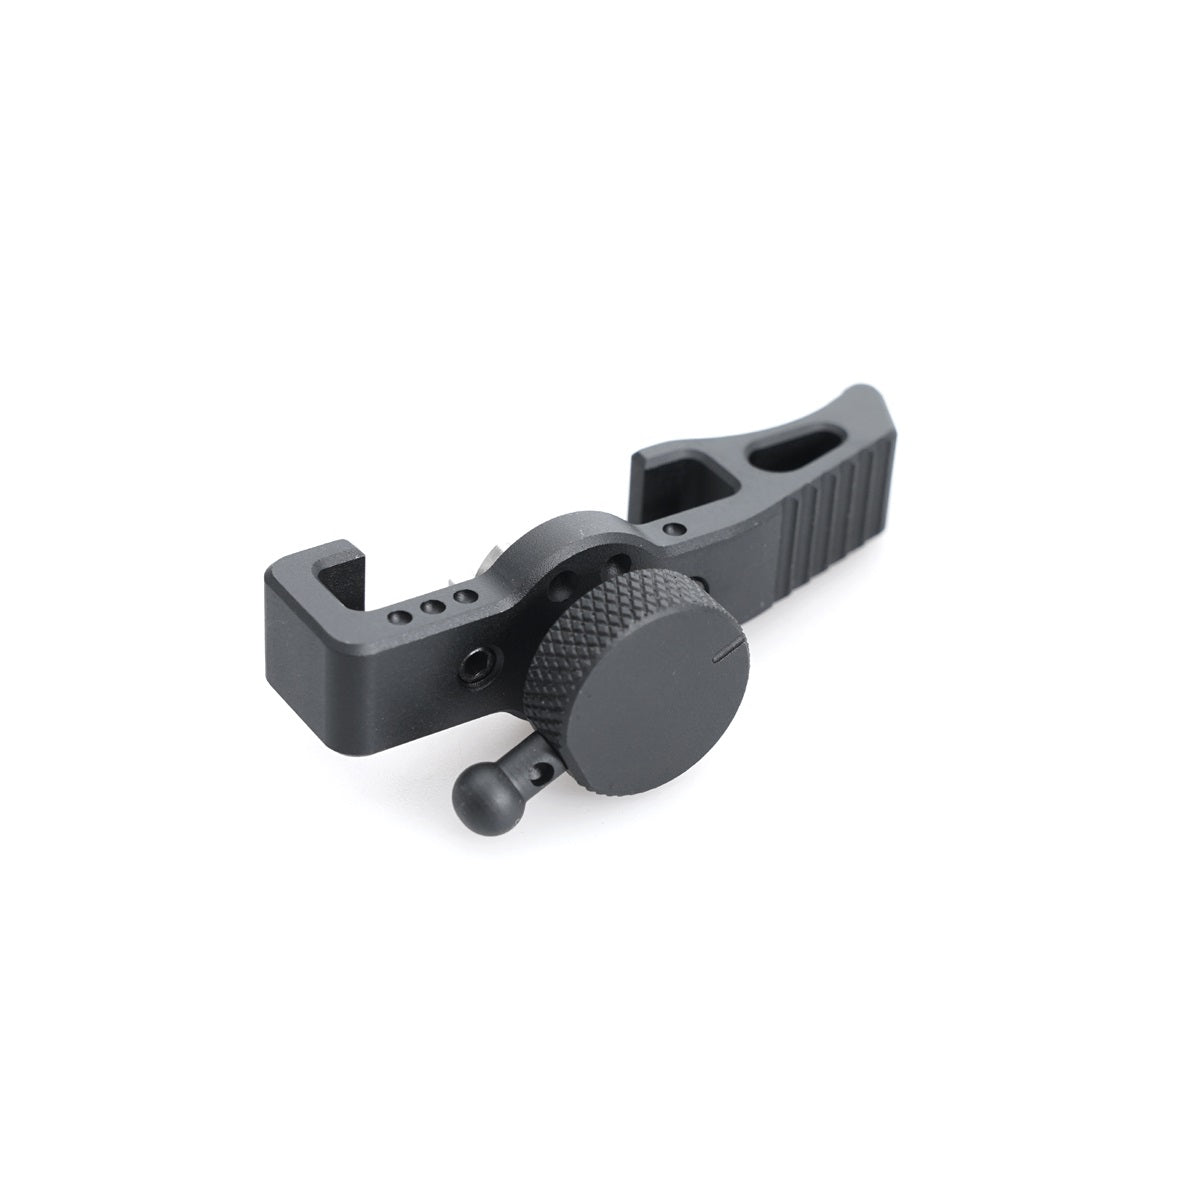 5KU CNC Aluminum Selector Charging Handle Type-1 for AAP-01 Pistol ( ABAAP-012 )